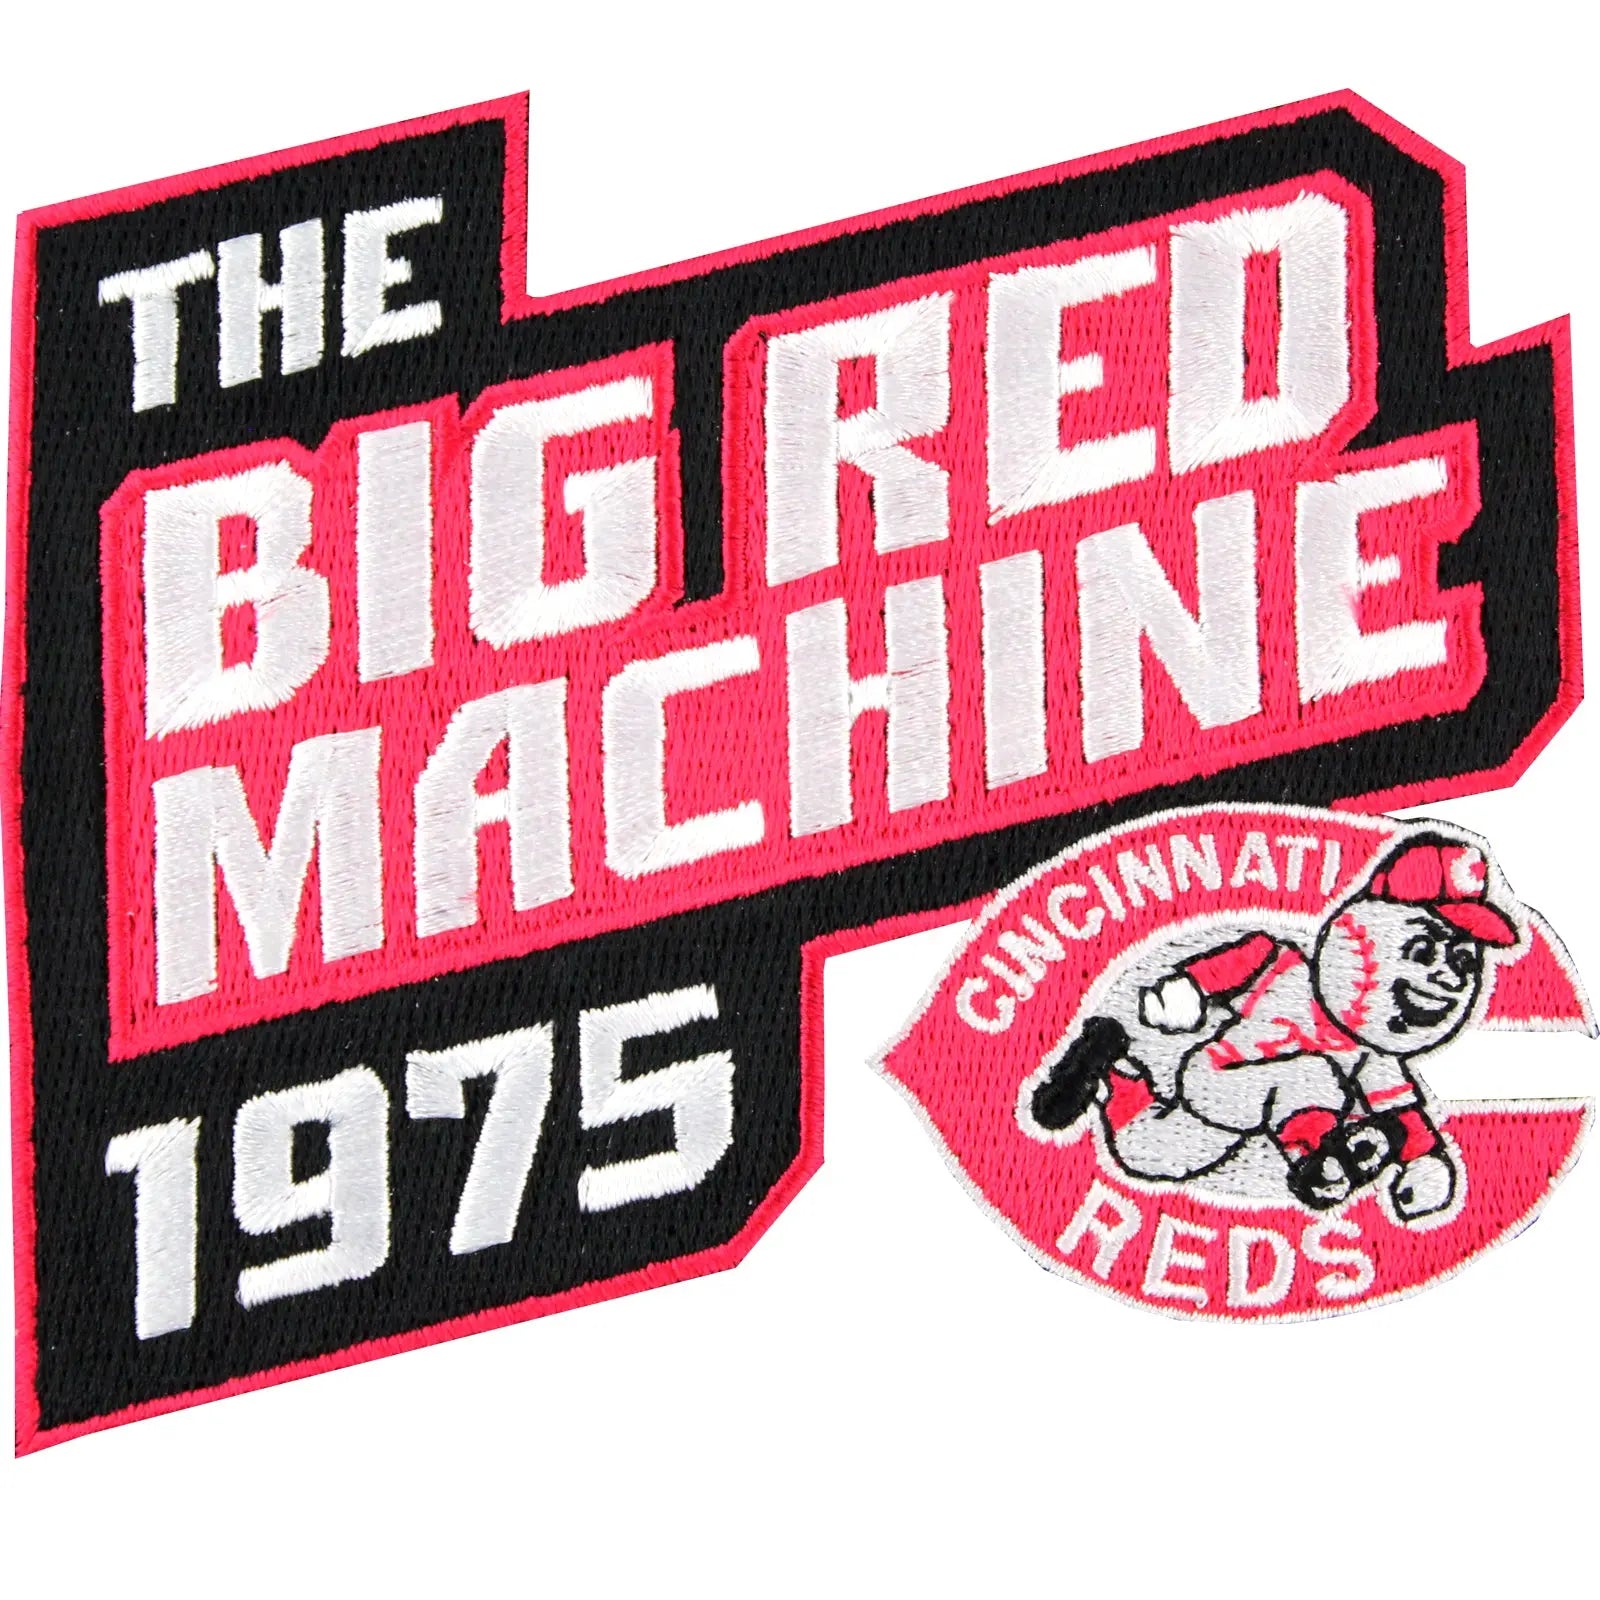 Lot Detail - 1975 World Series Champion Cincinnati Reds Big Red